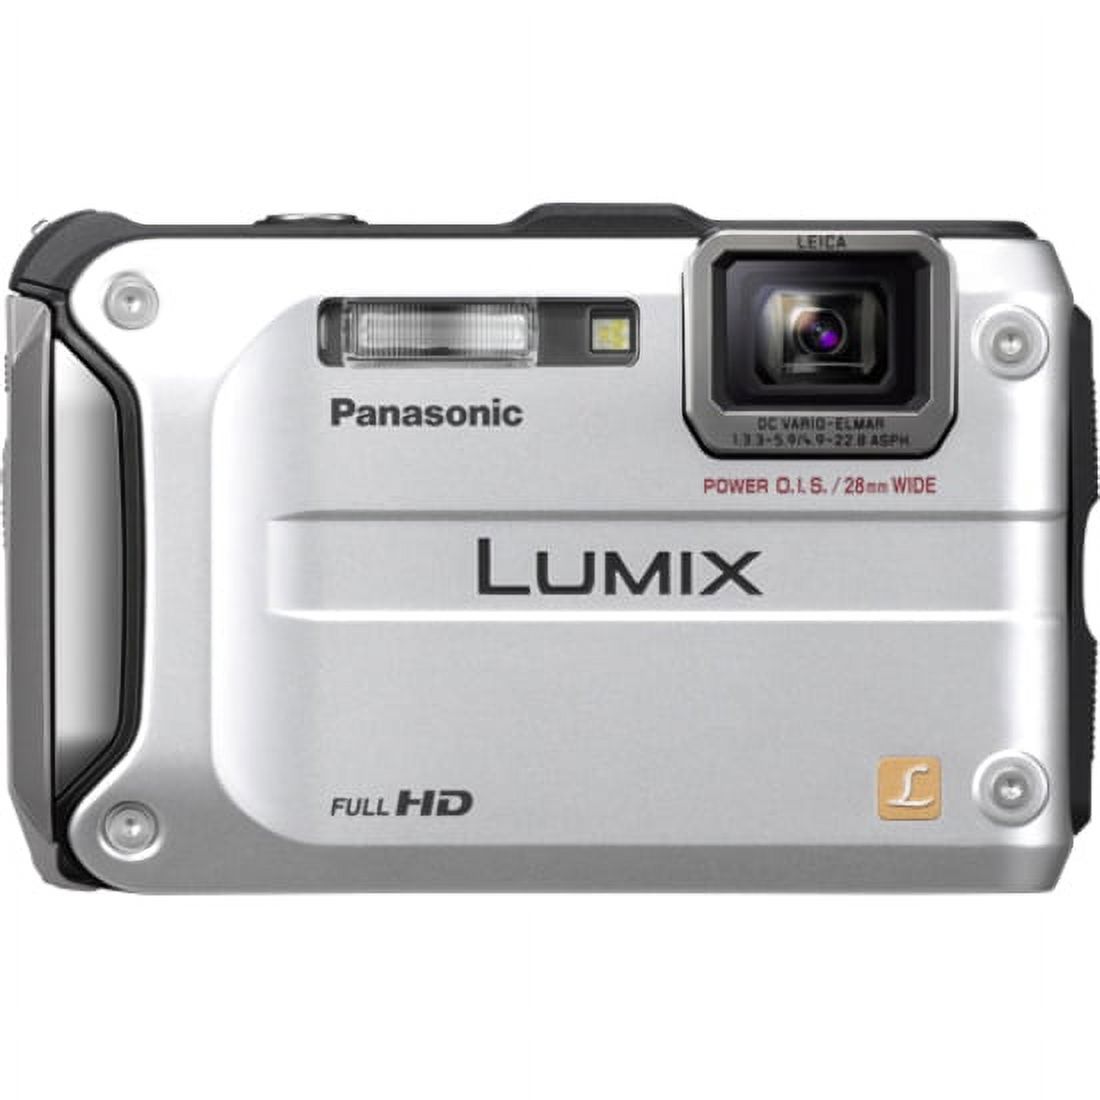 Panasonic Lumix DMC-TS3 12.1 Megapixel Compact Camera, Silver - image 1 of 3